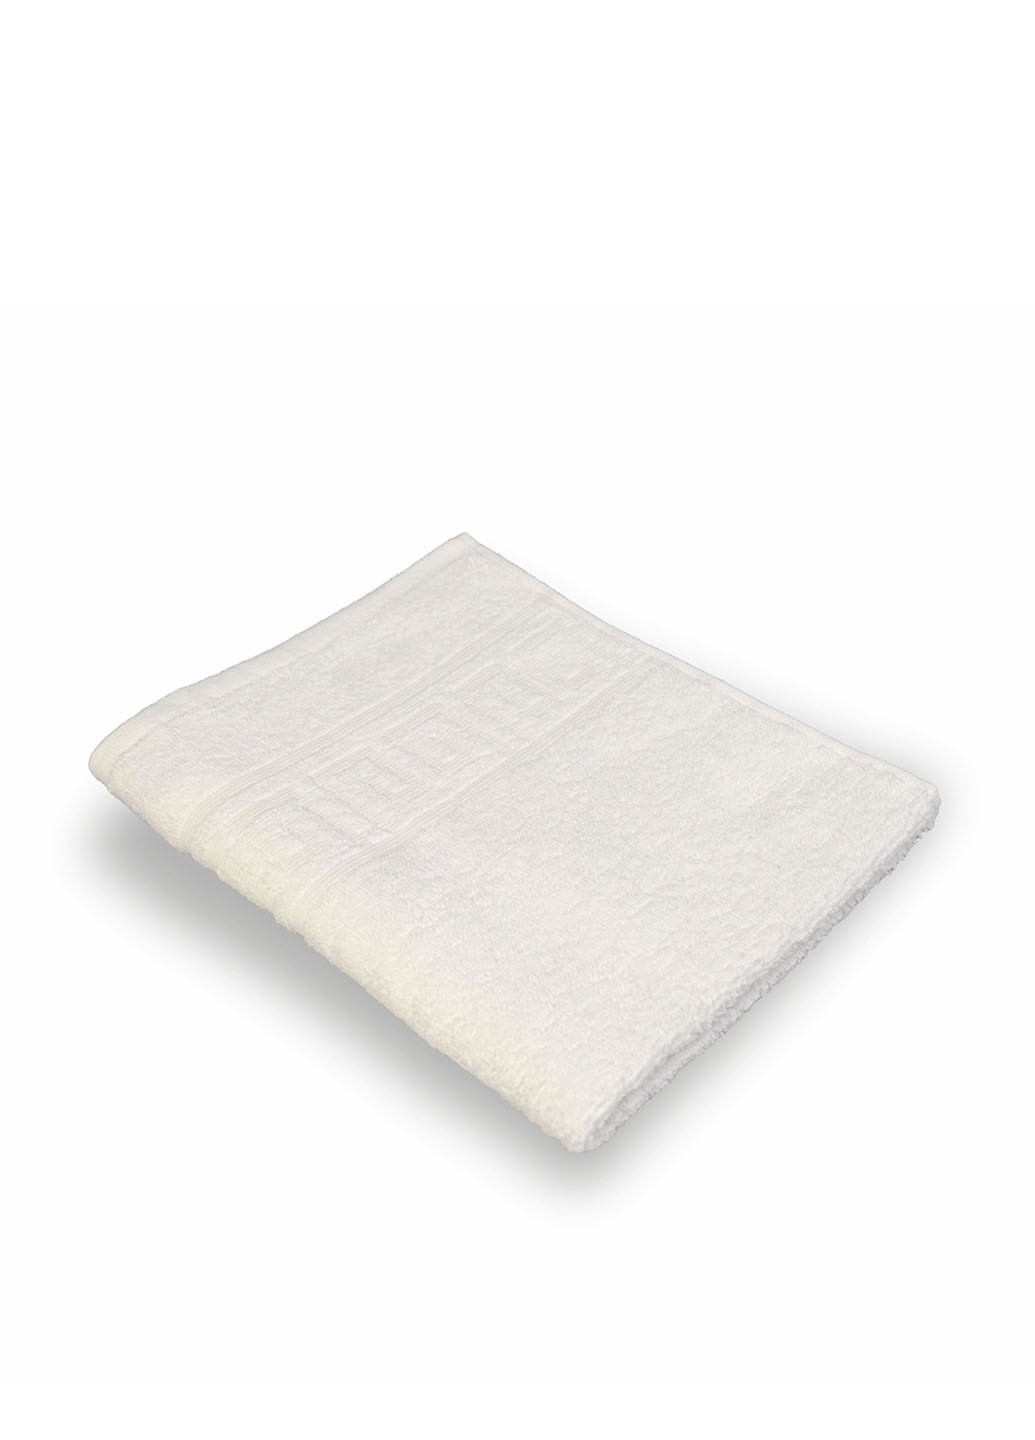 No Brand полотенце, 40х70 см однотонный белый производство - Туркменистан